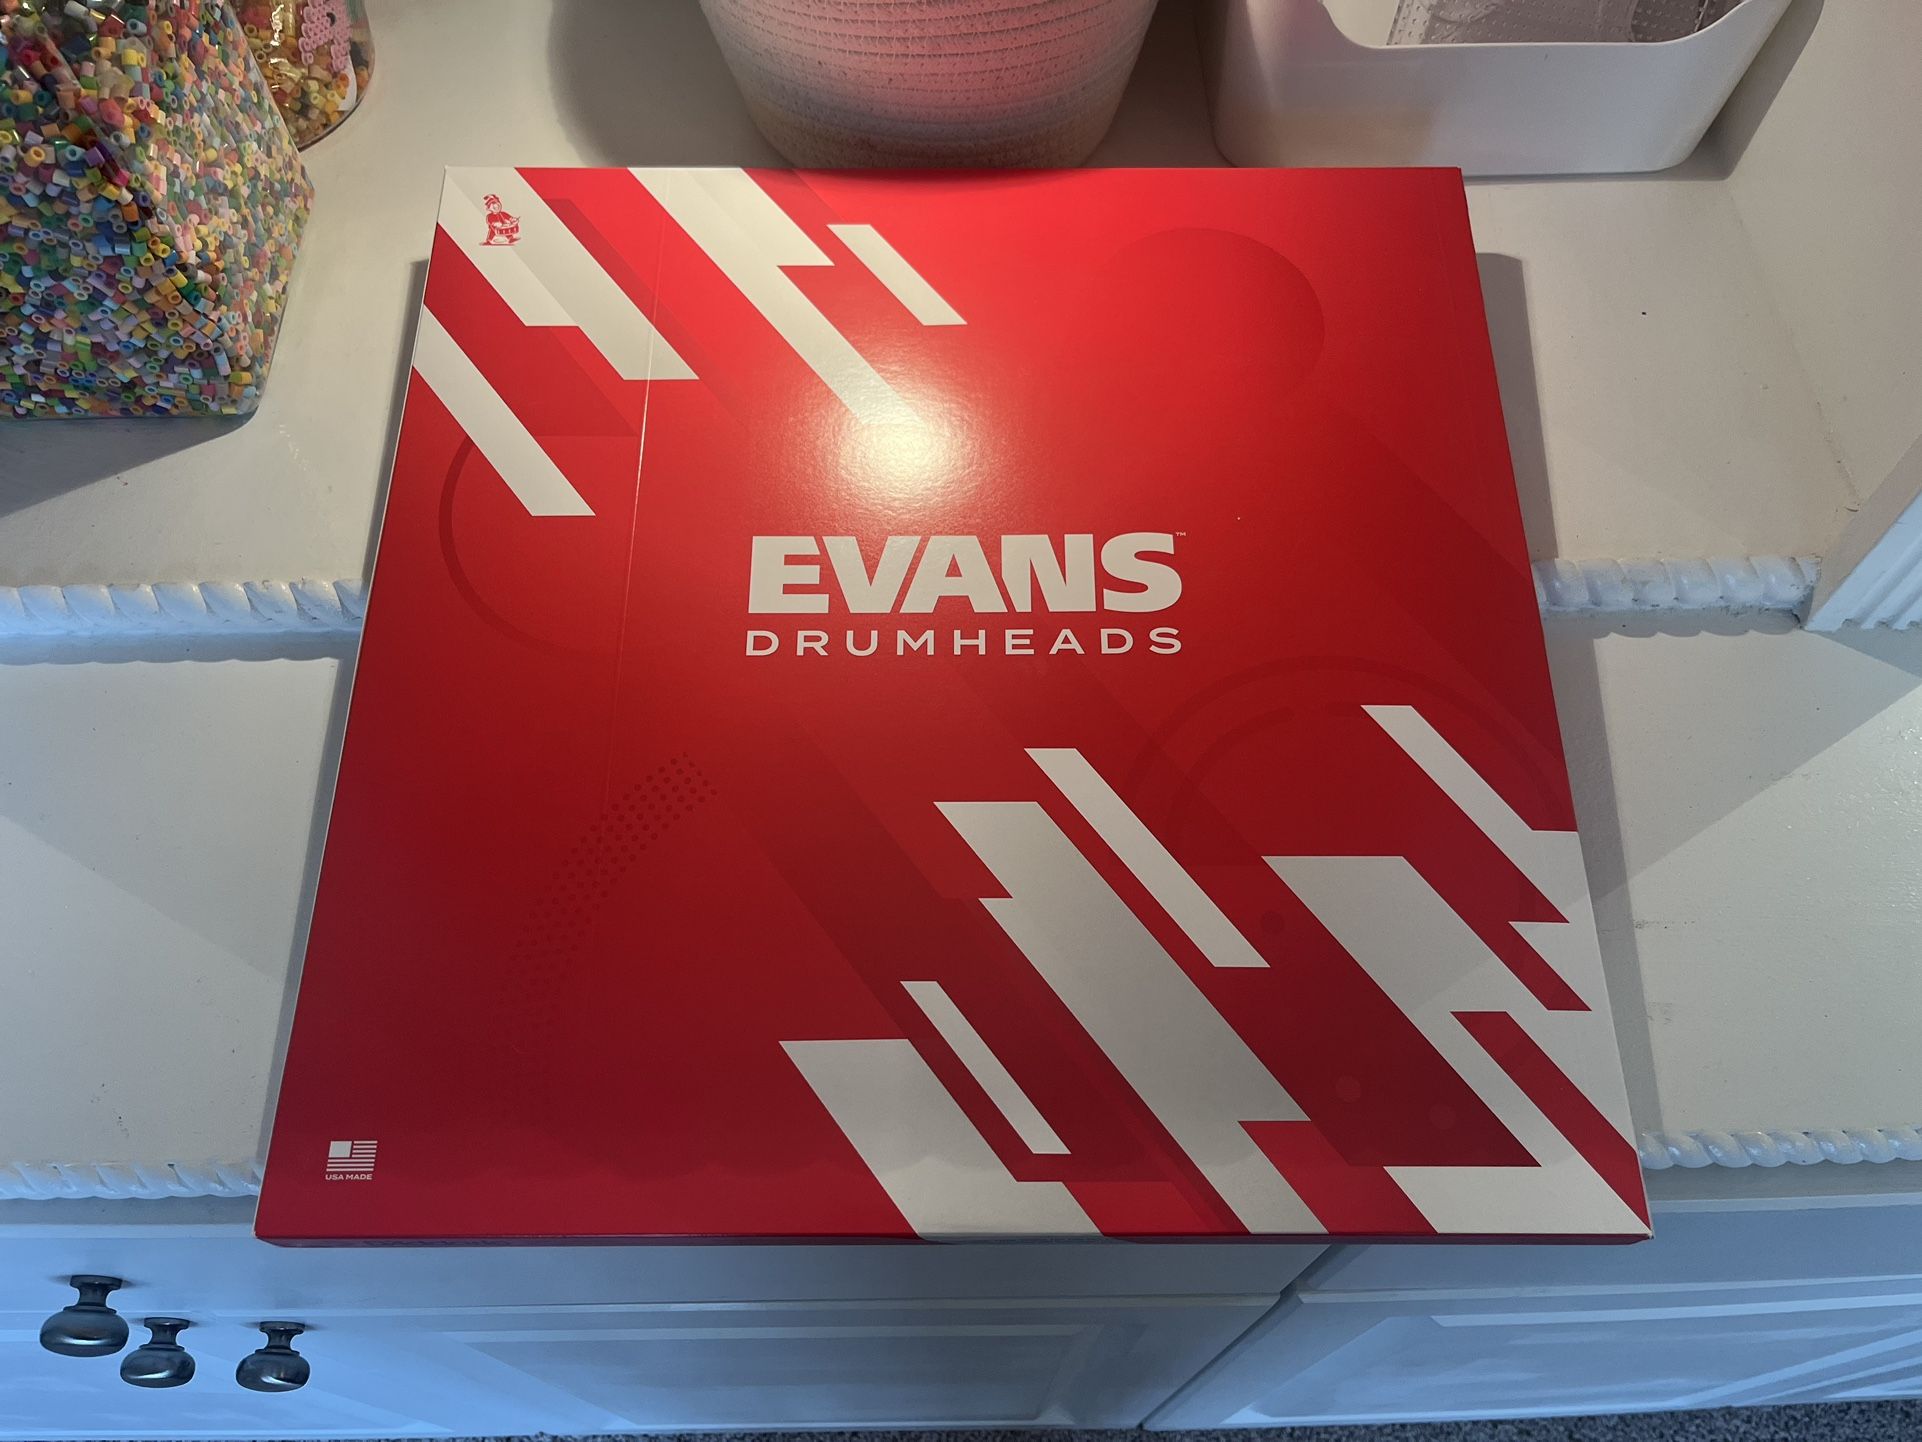 Evans G2 Drum Heads Used Once 